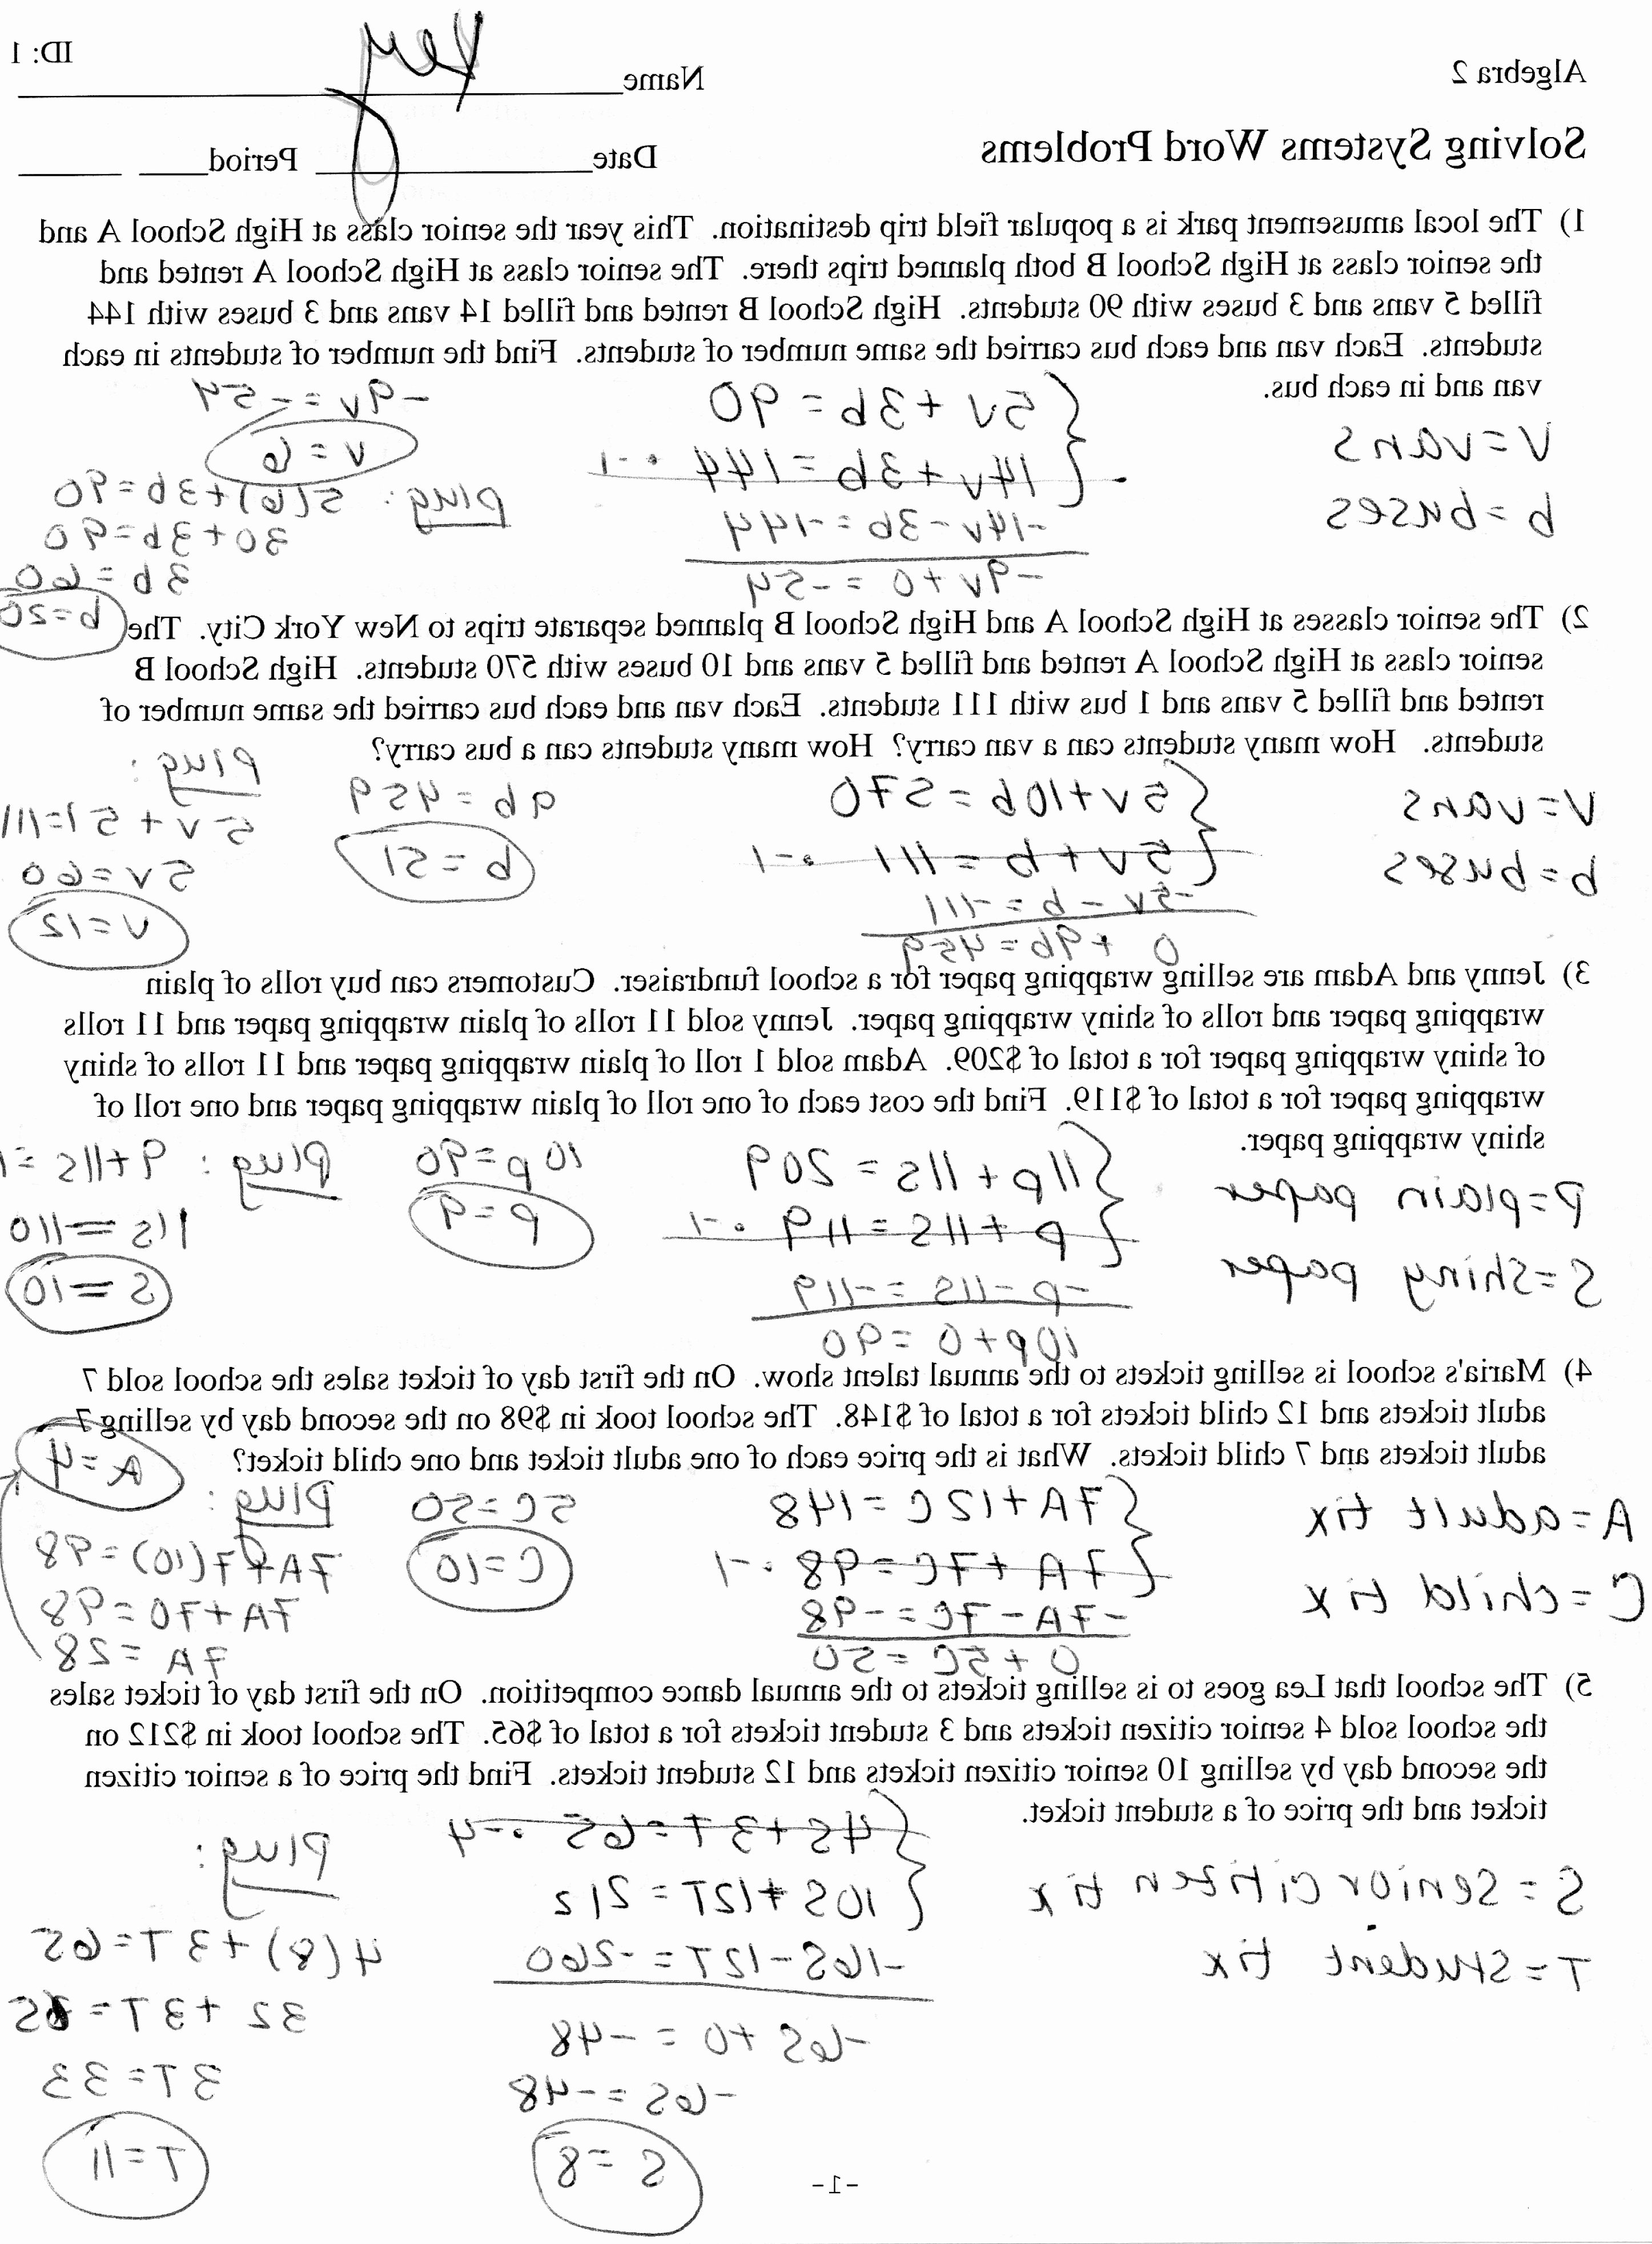 Solving Equations Word Problems Worksheet Luxury solving System Equations Word Problems Worksheet